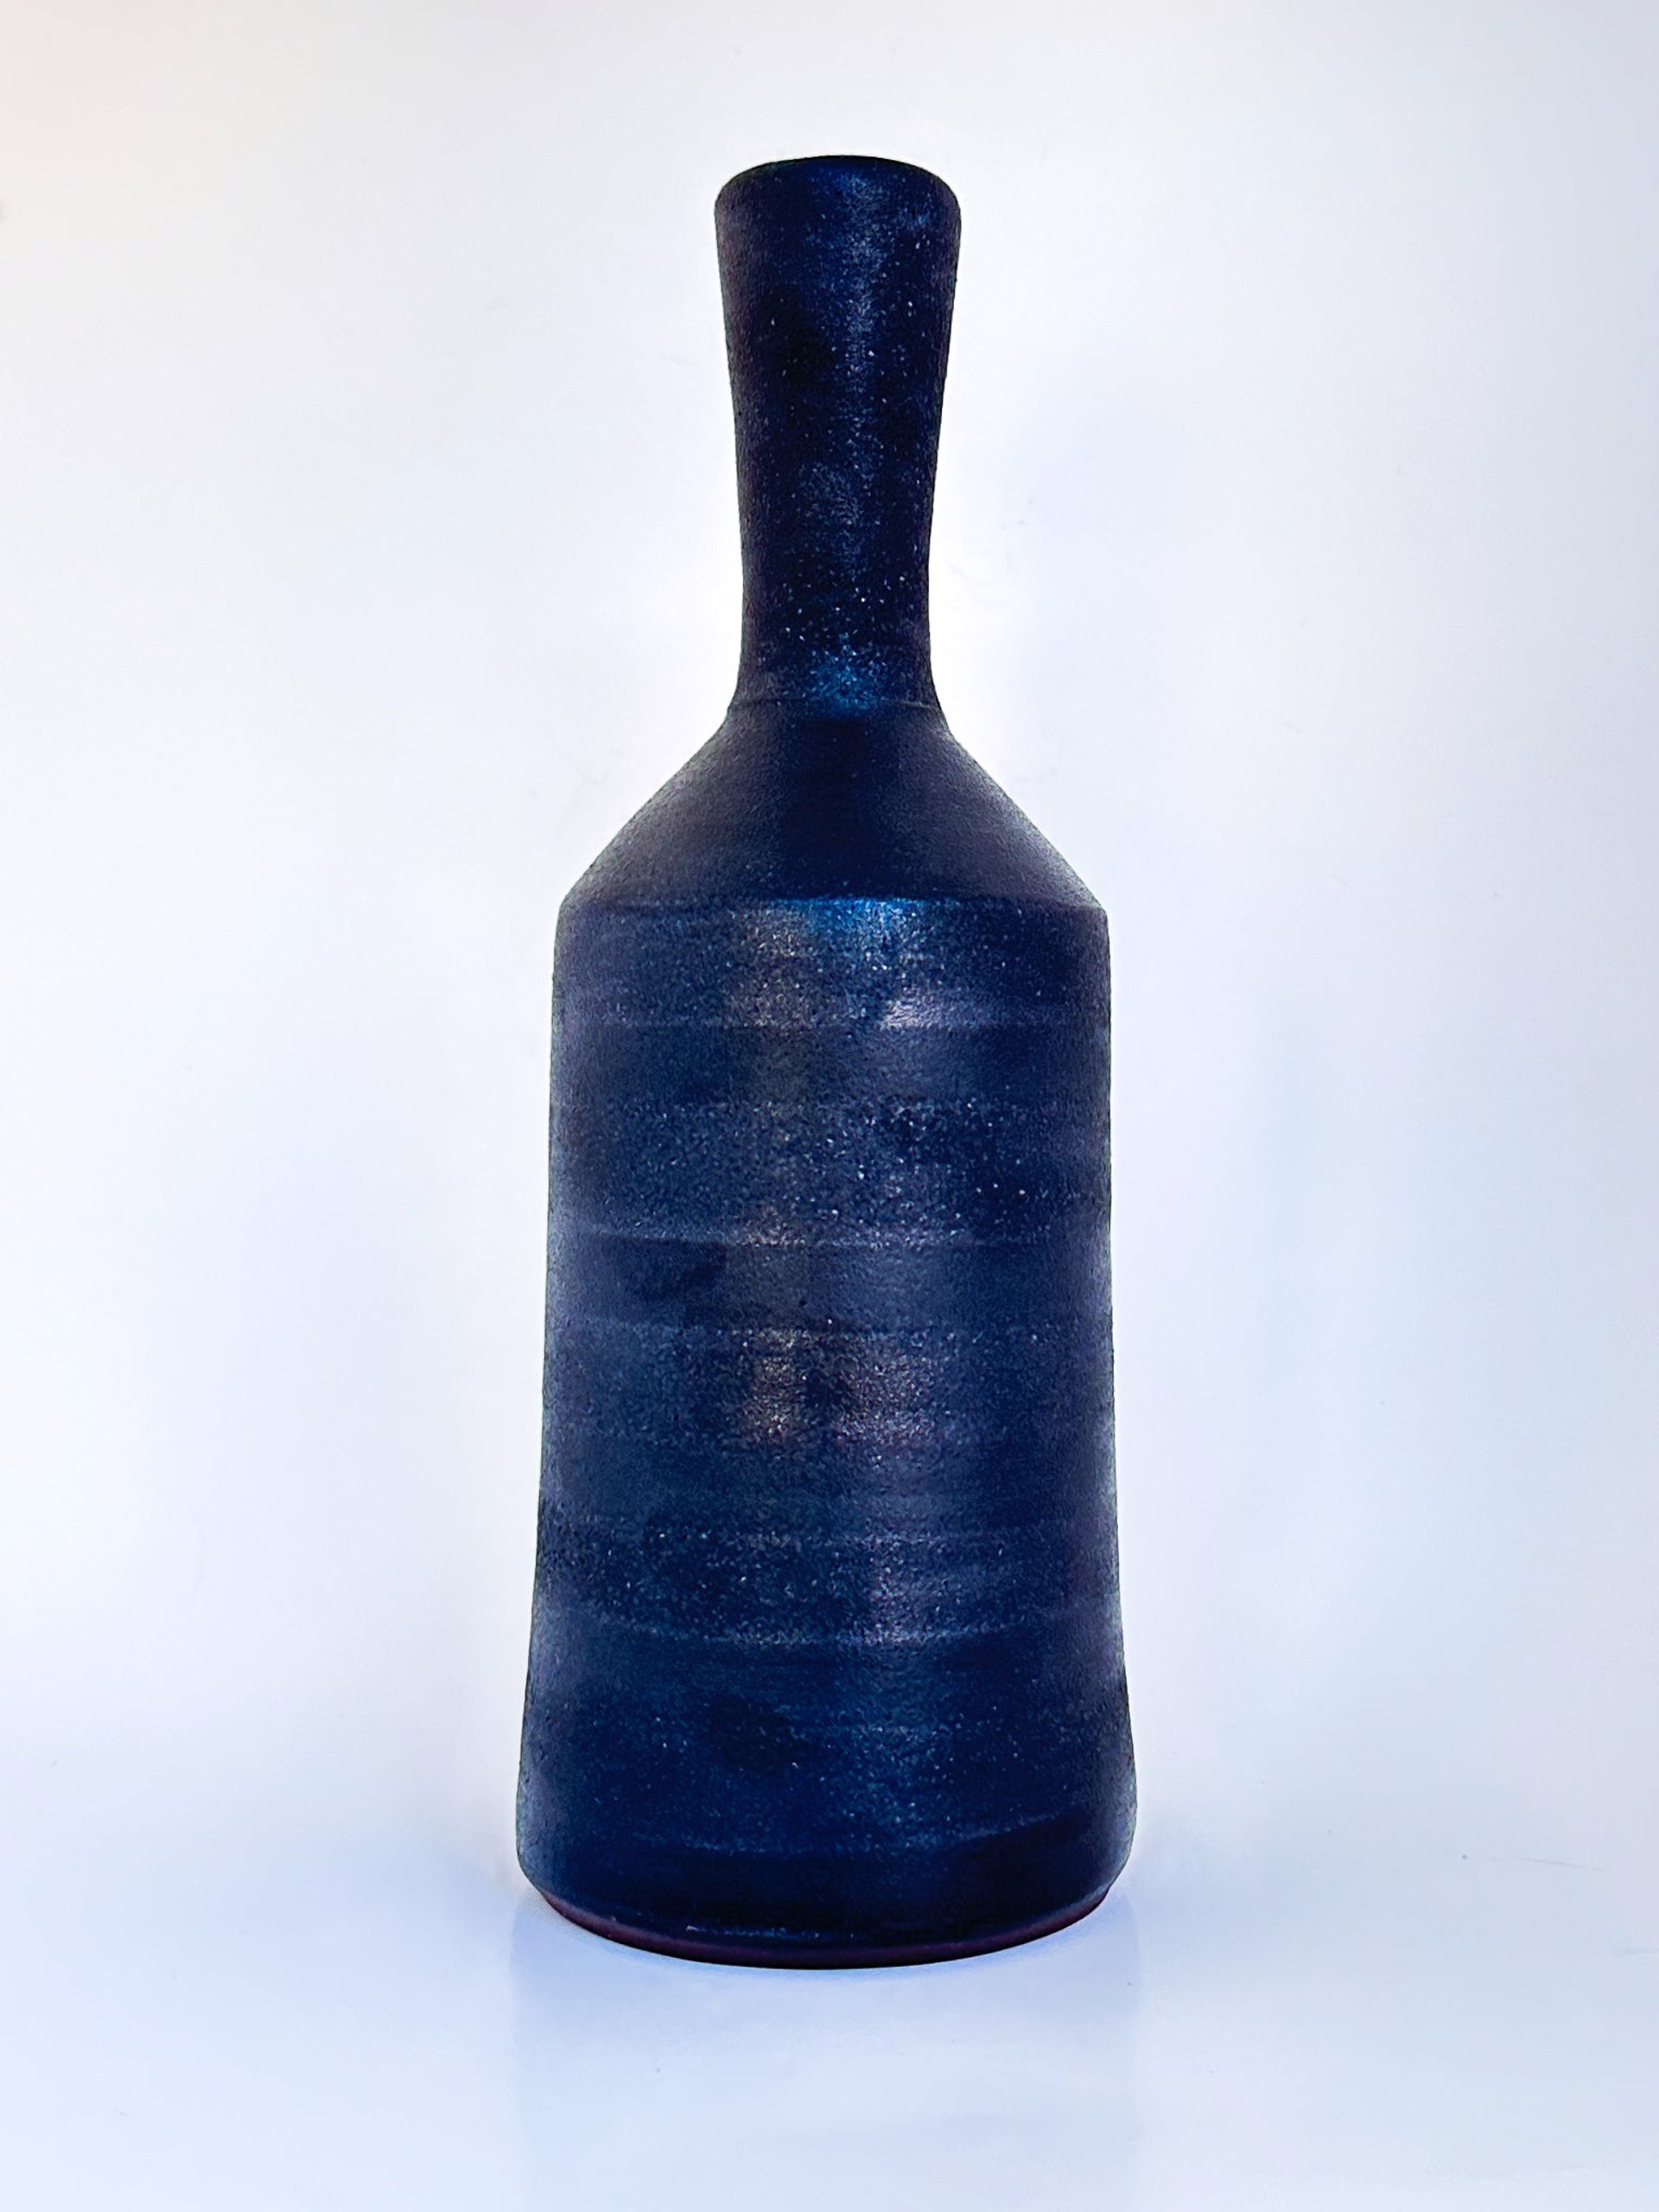 Bottle by Patty Bilbro